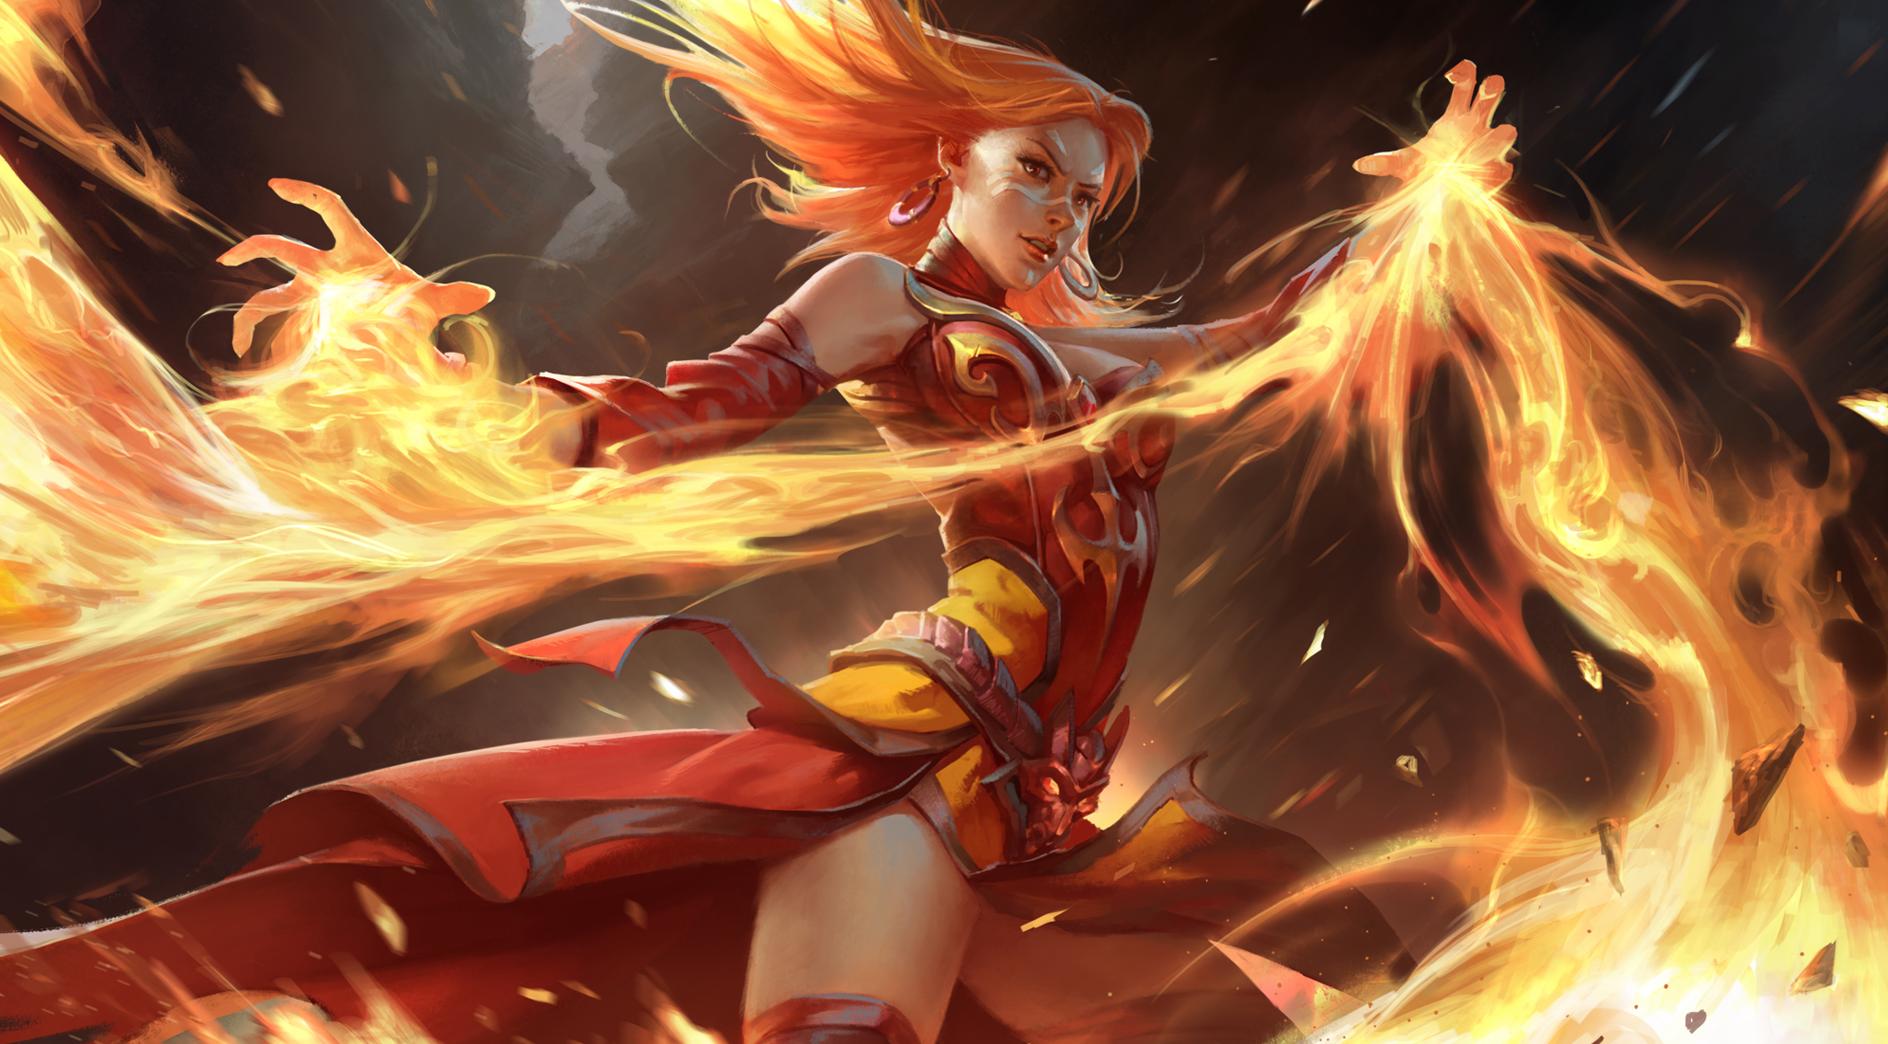 General 1888x1044 Dota 2 Valve Corporation PC gaming video game girls video game art fantasy art fantasy girl magic fire